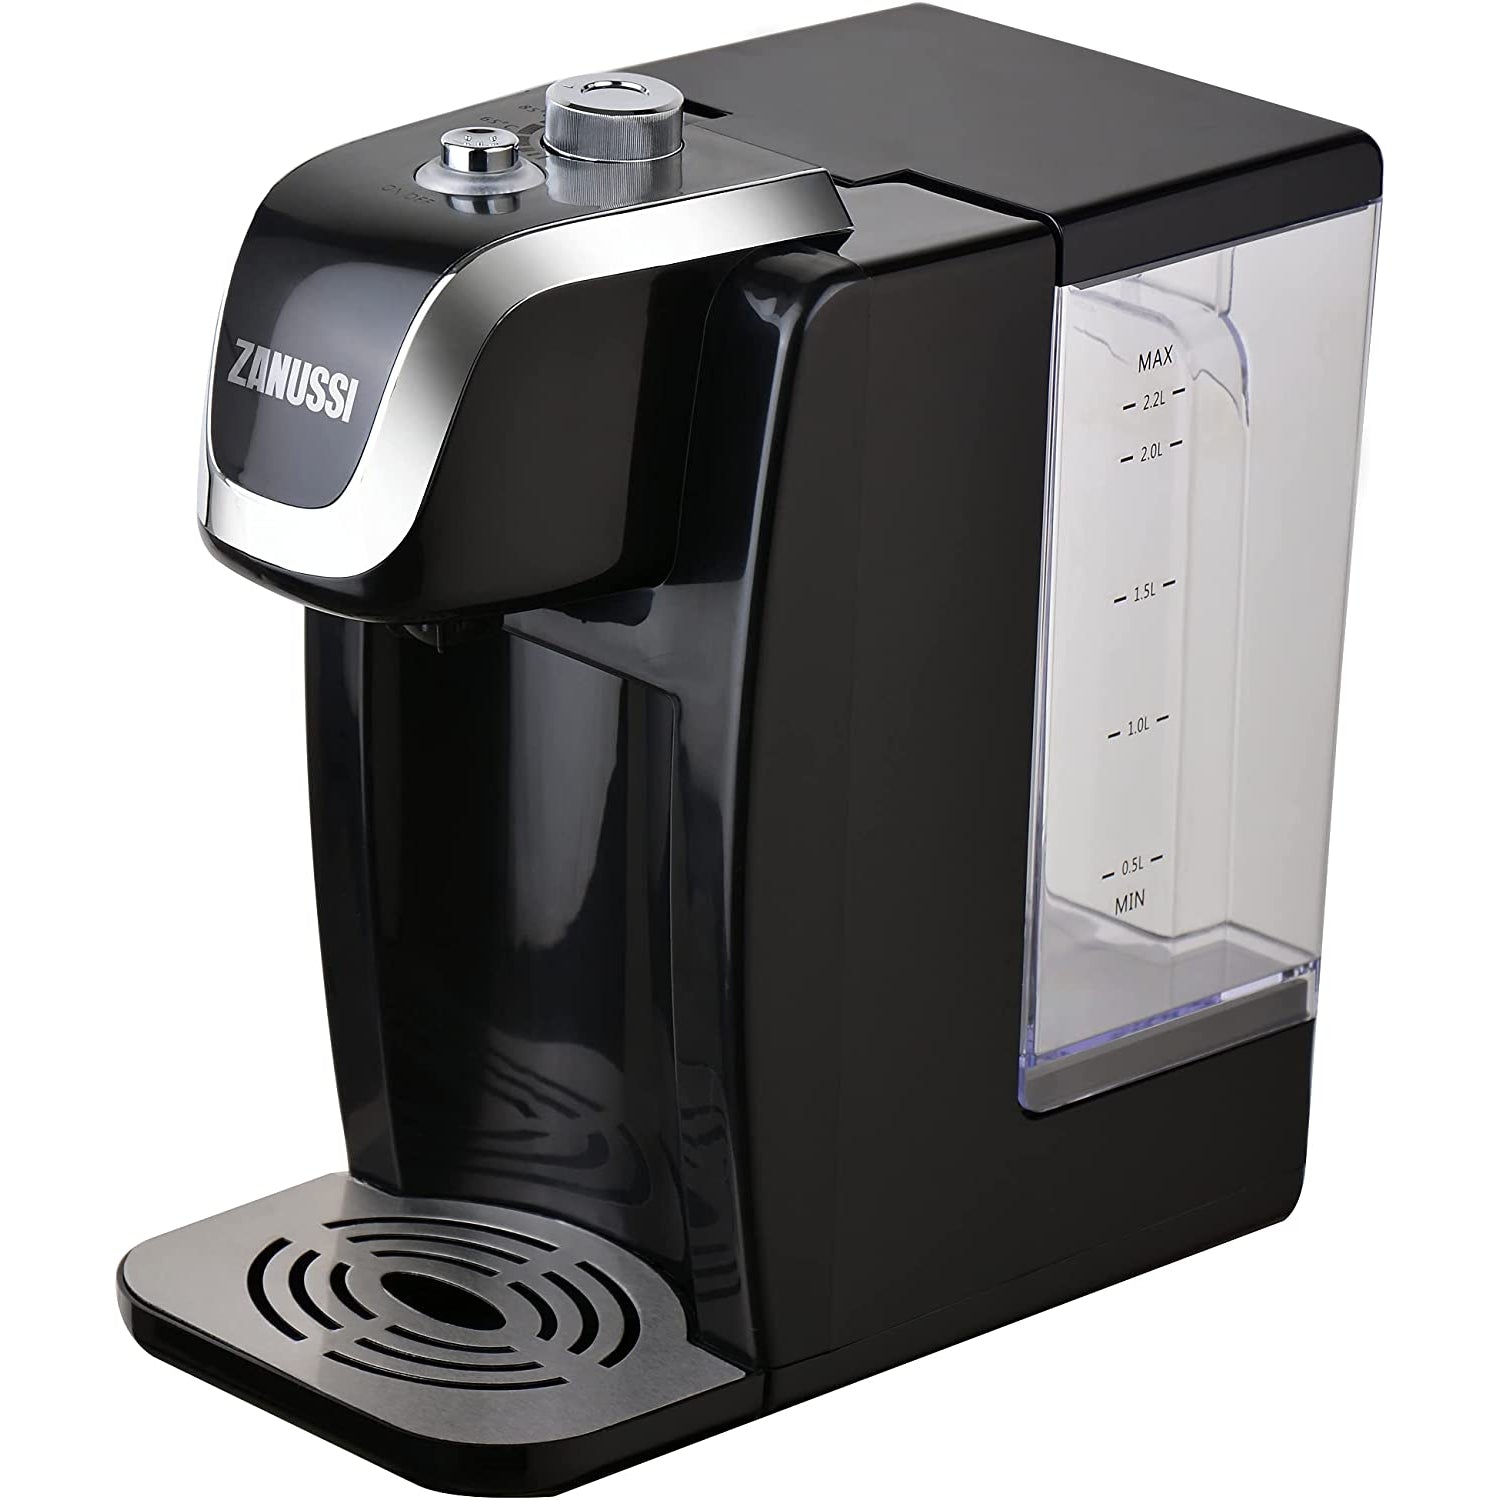 Zanussi Z-H22 Instant Hot Water Dispenser with Filter - Black